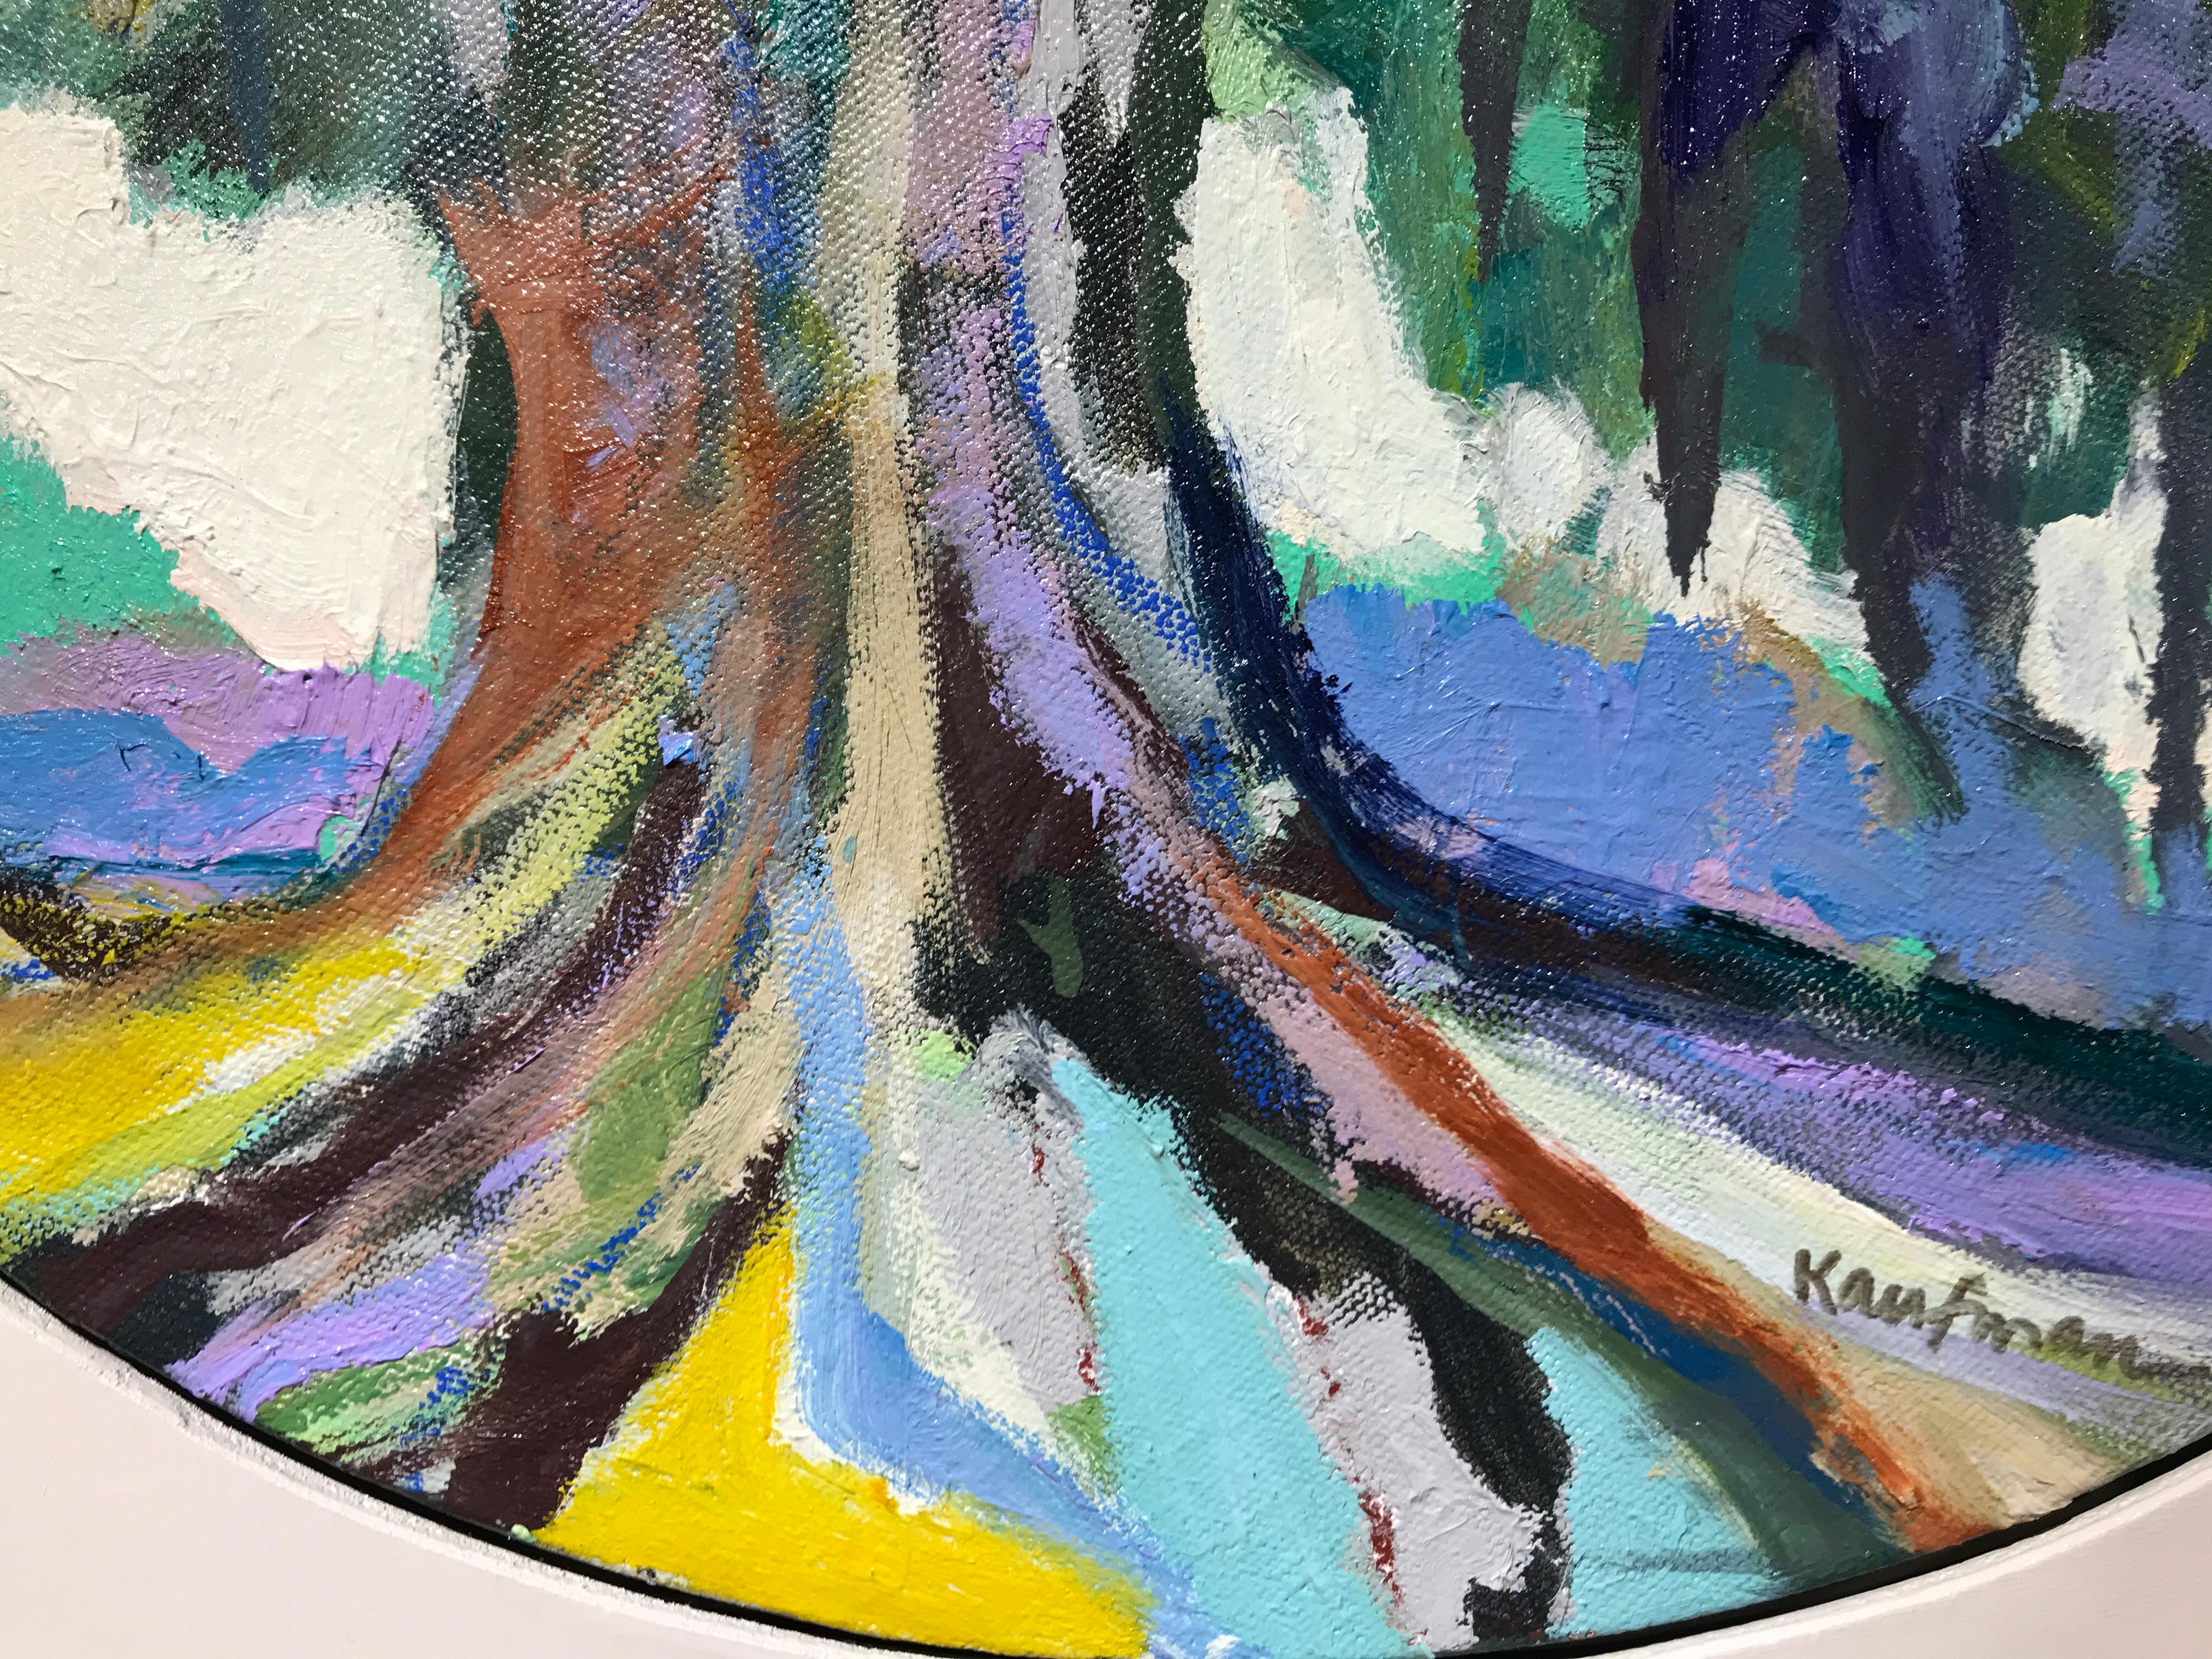 Oak II, Kelli Kaufman Framed Landscape Oil and Wax on Canvas Painting 4